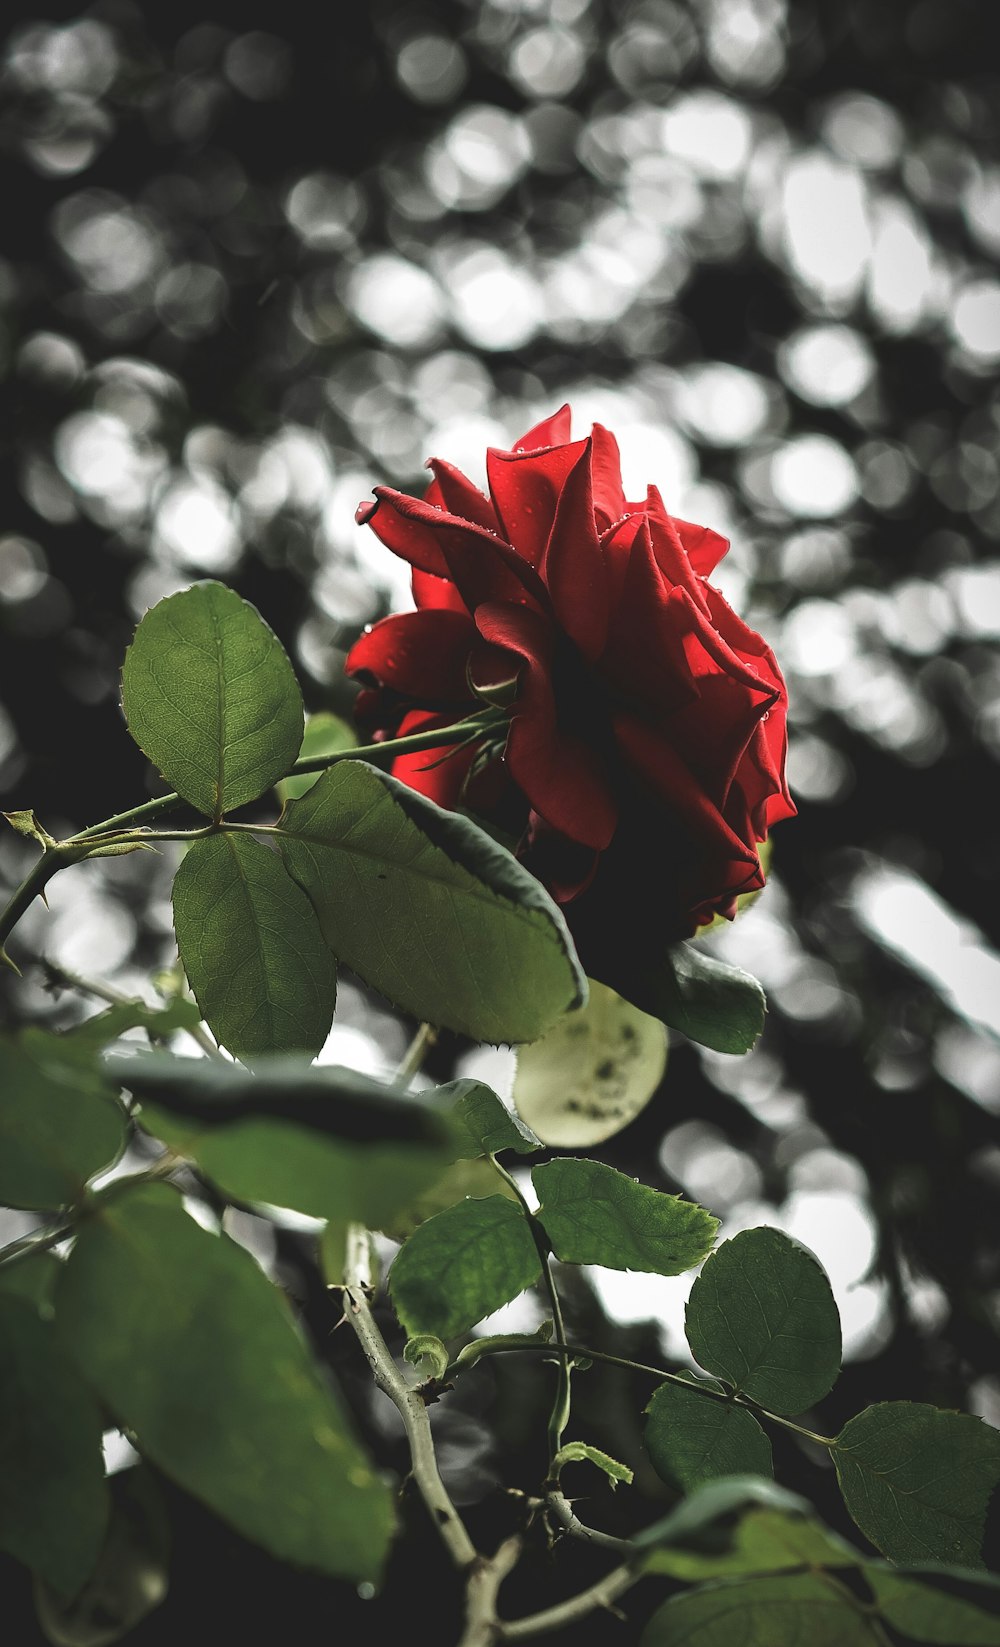 Rote Rose blüht tagsüber